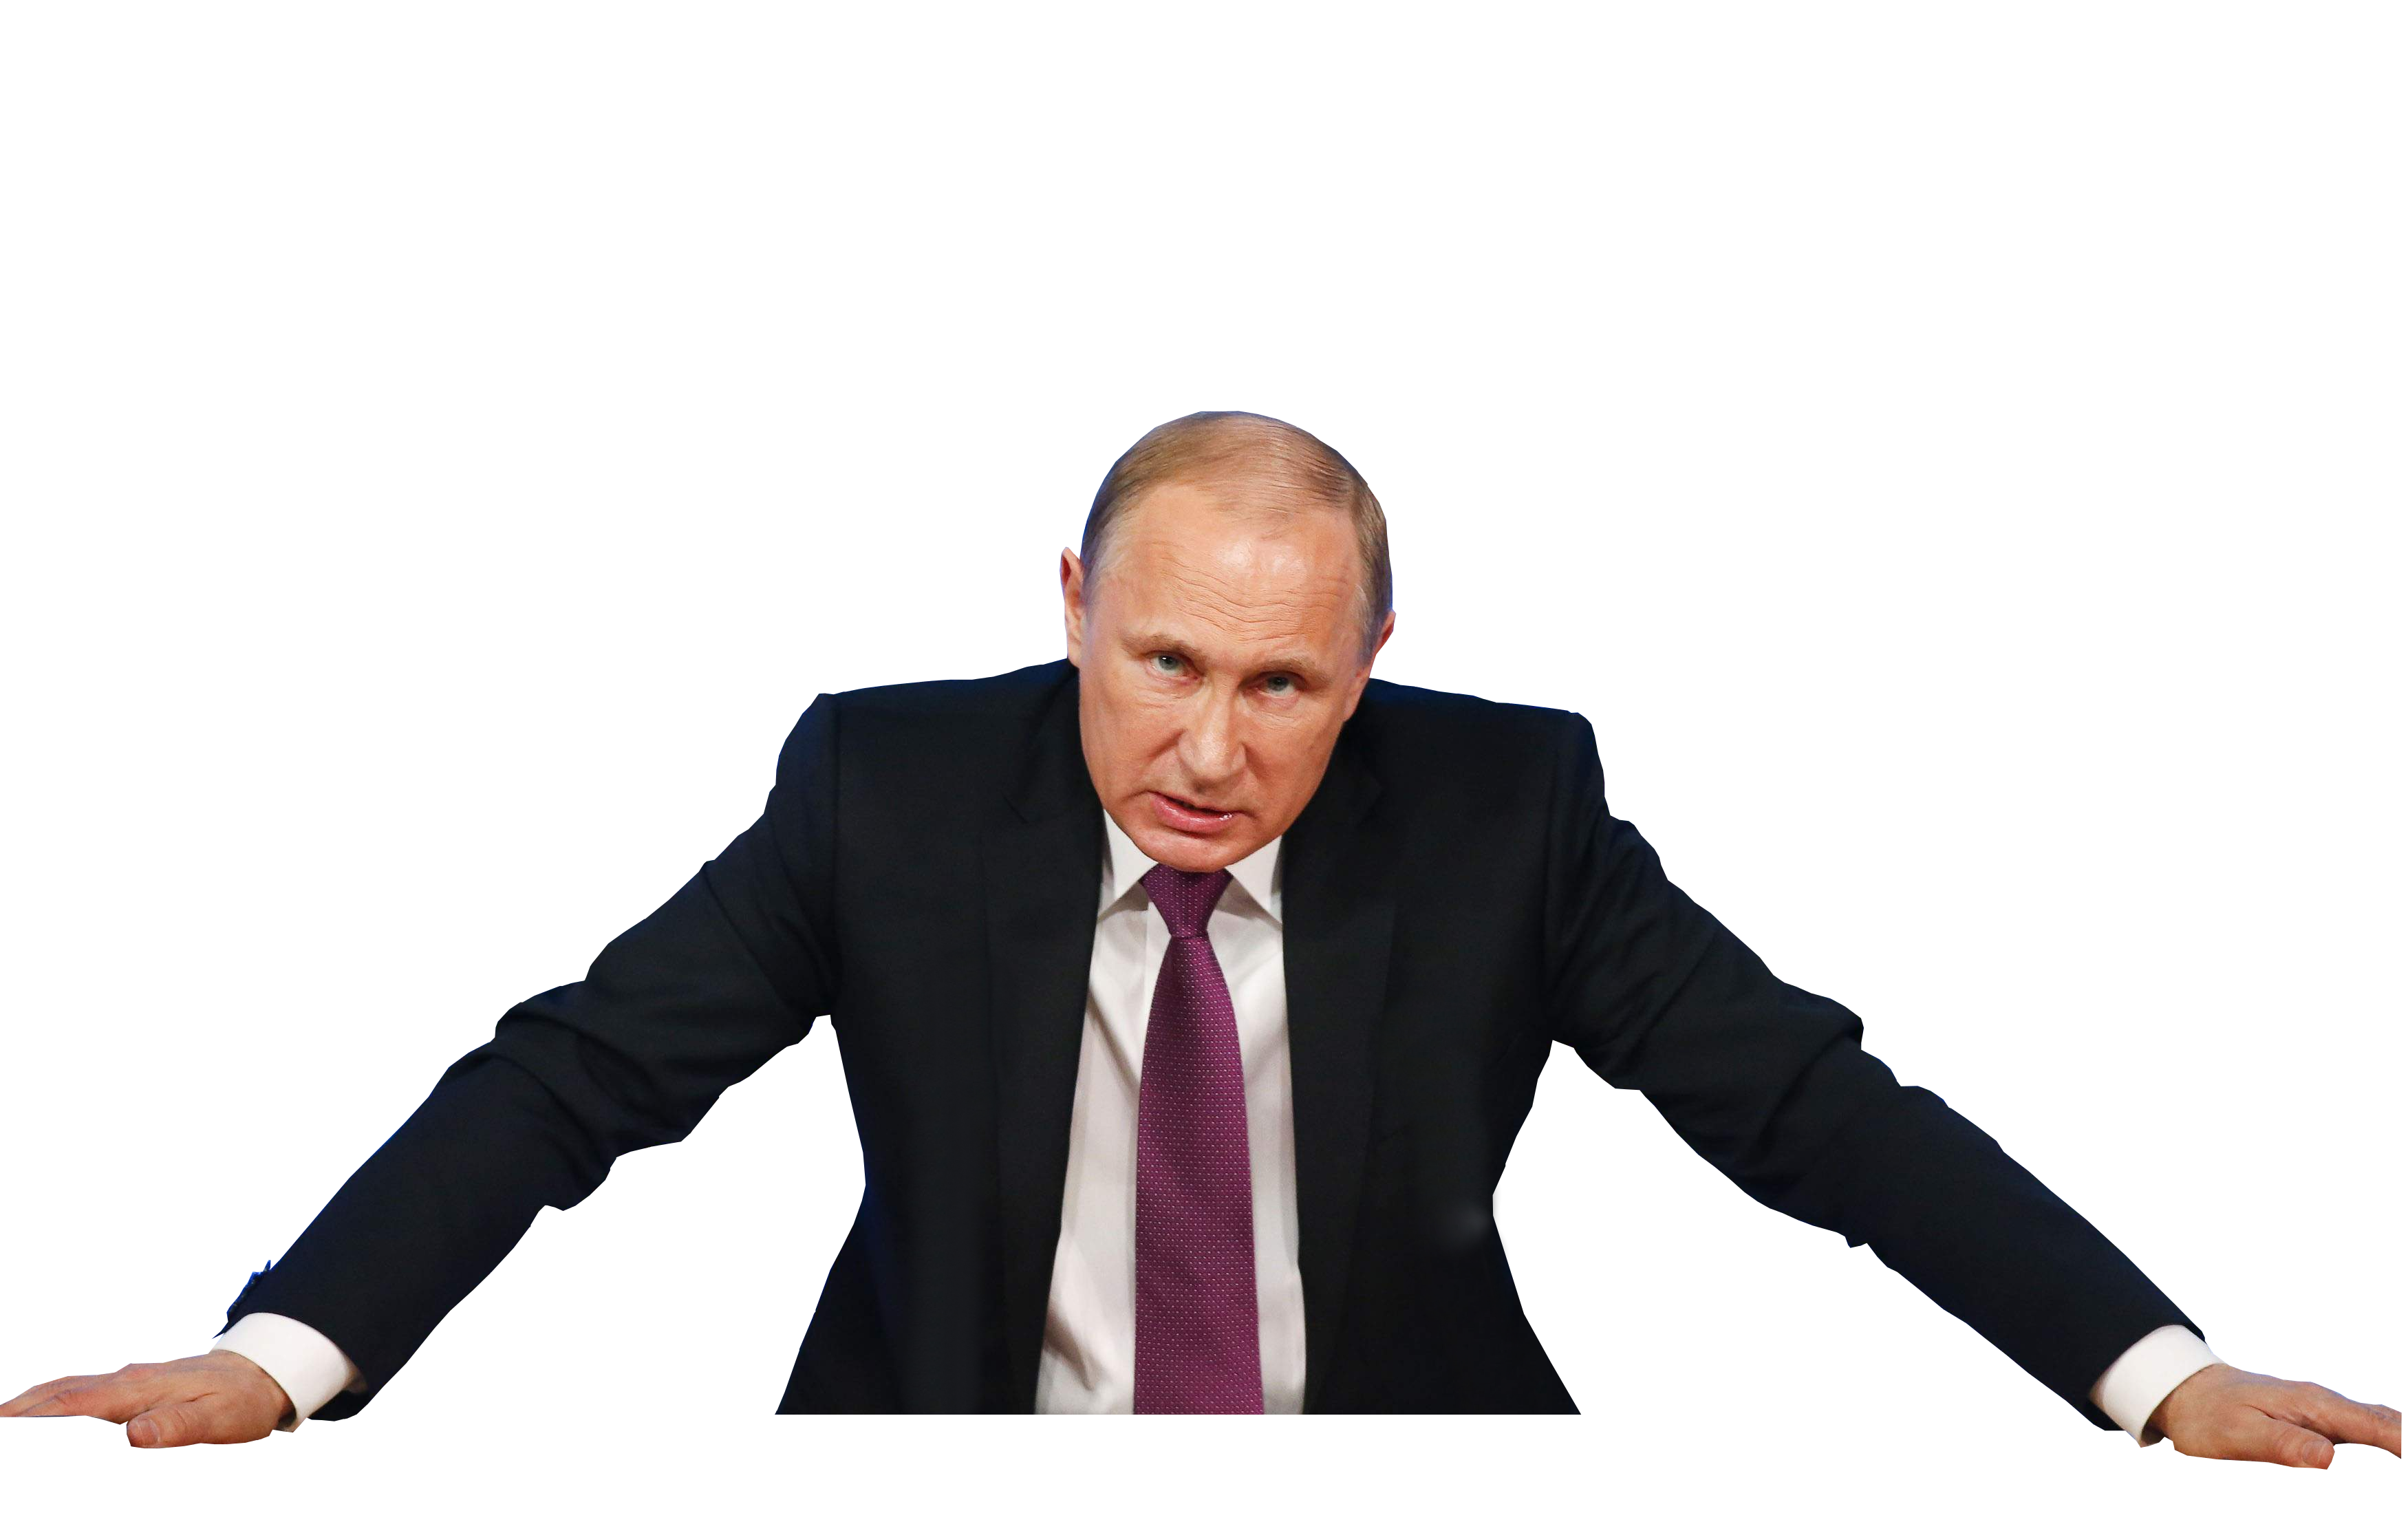 Russian President Vladimir Putin PNG HD Image